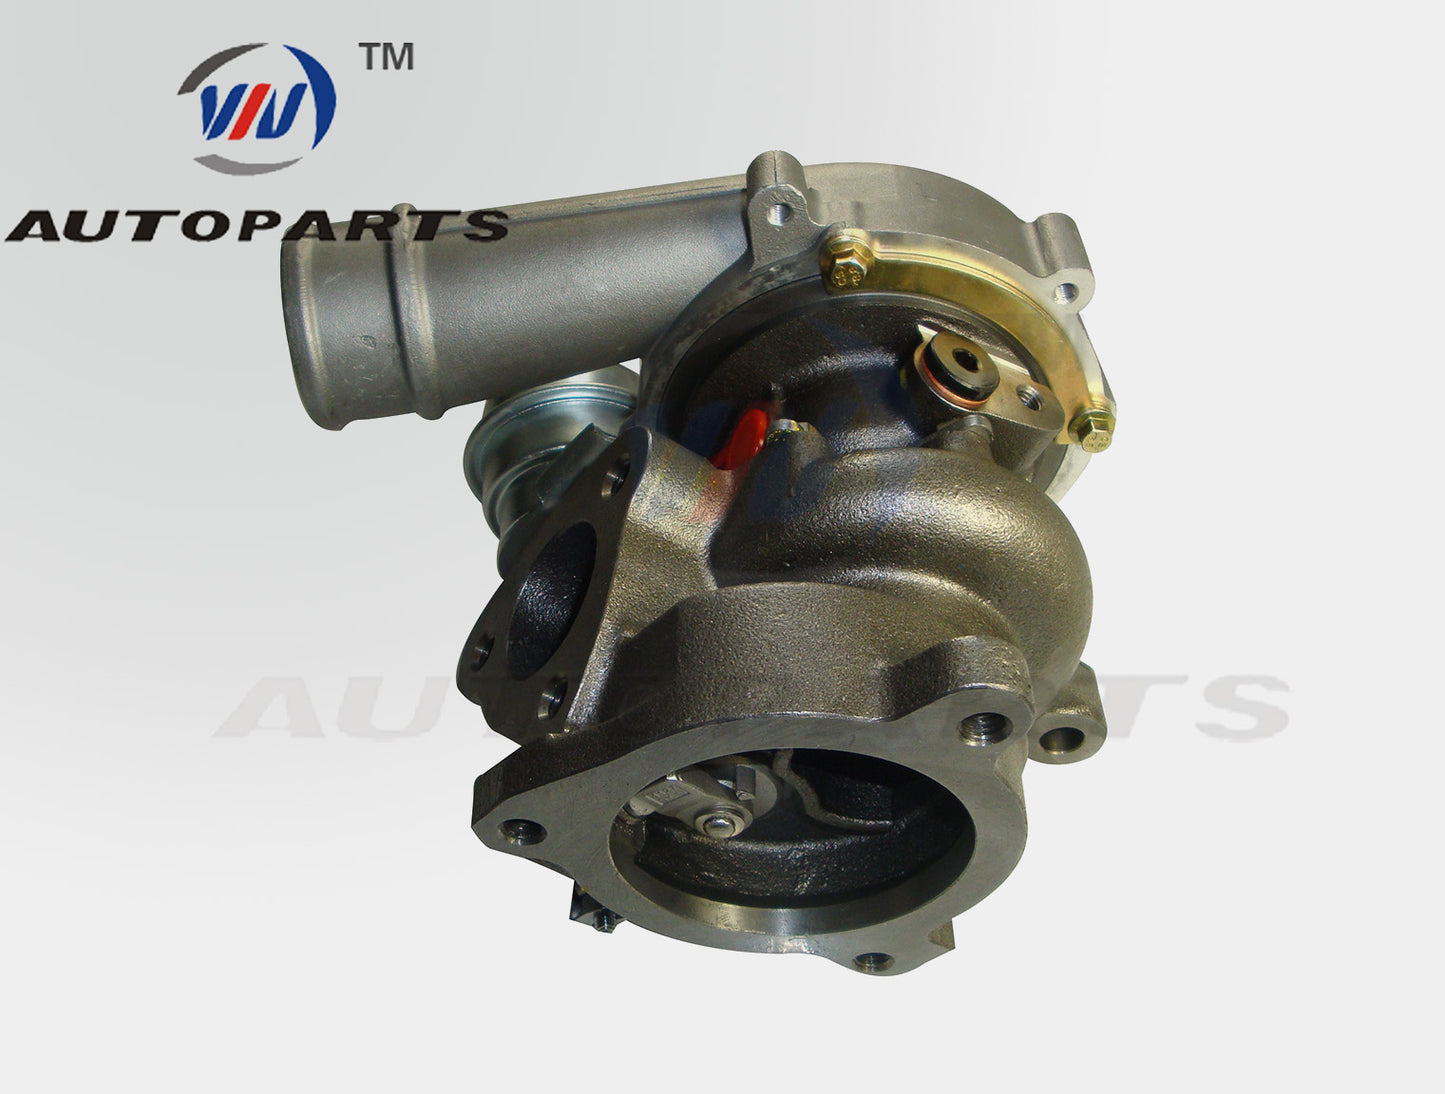 Turbocharger 53049880022 for Audi S3/TT Seat Leon 1.8L Gasoline Engine